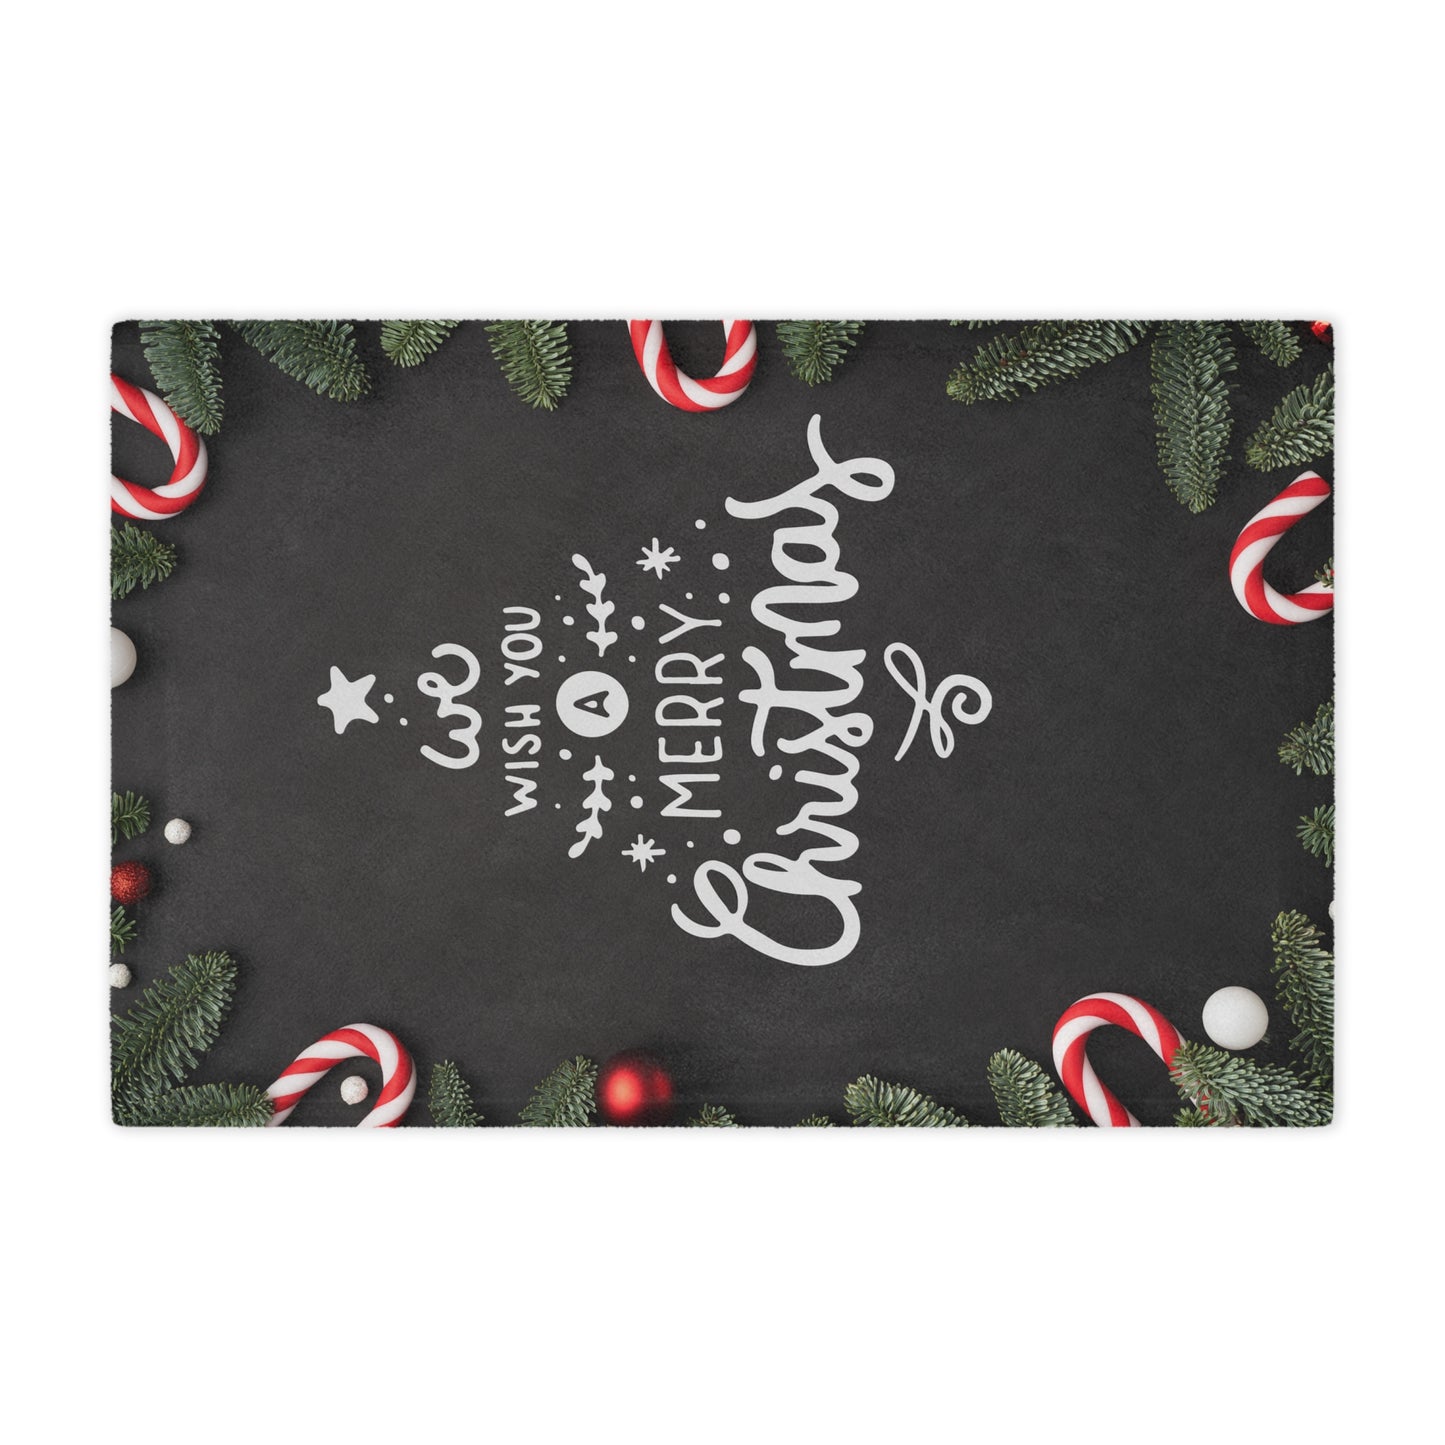 We Wish You Merry Christmas Printed Minky Blanket, Black